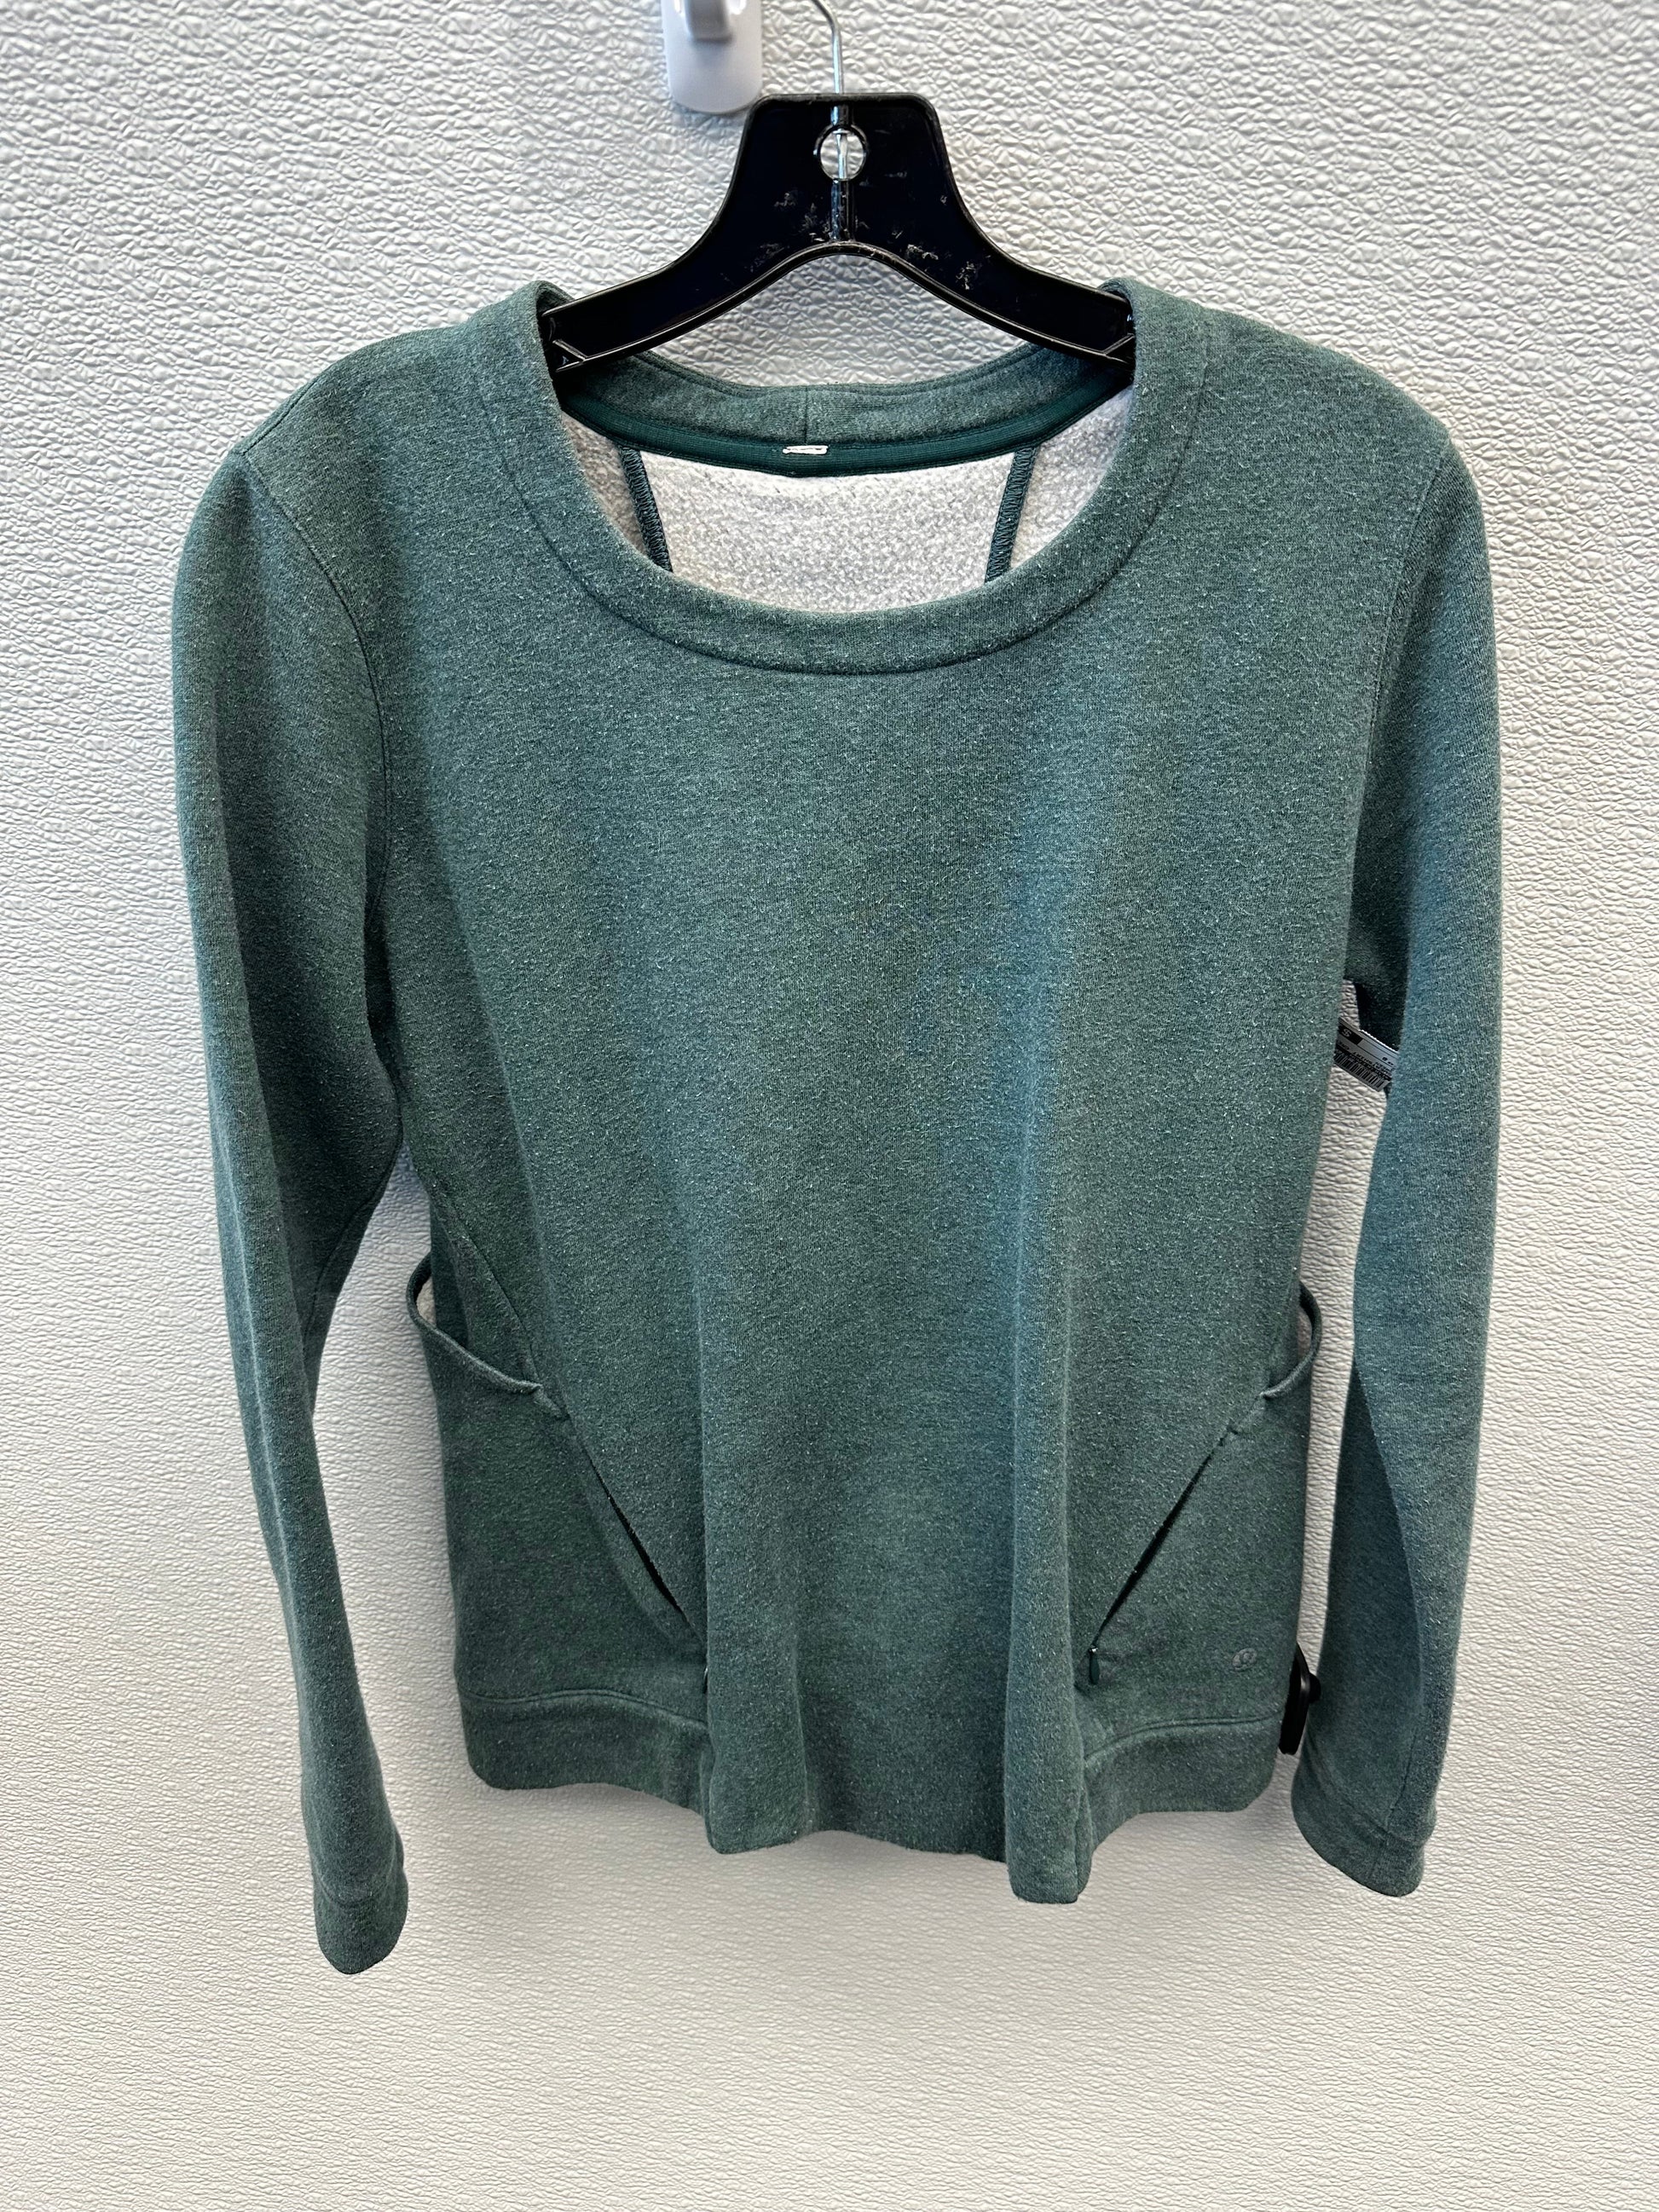 Sweatshirt Crewneck By Lululemon Size: 8